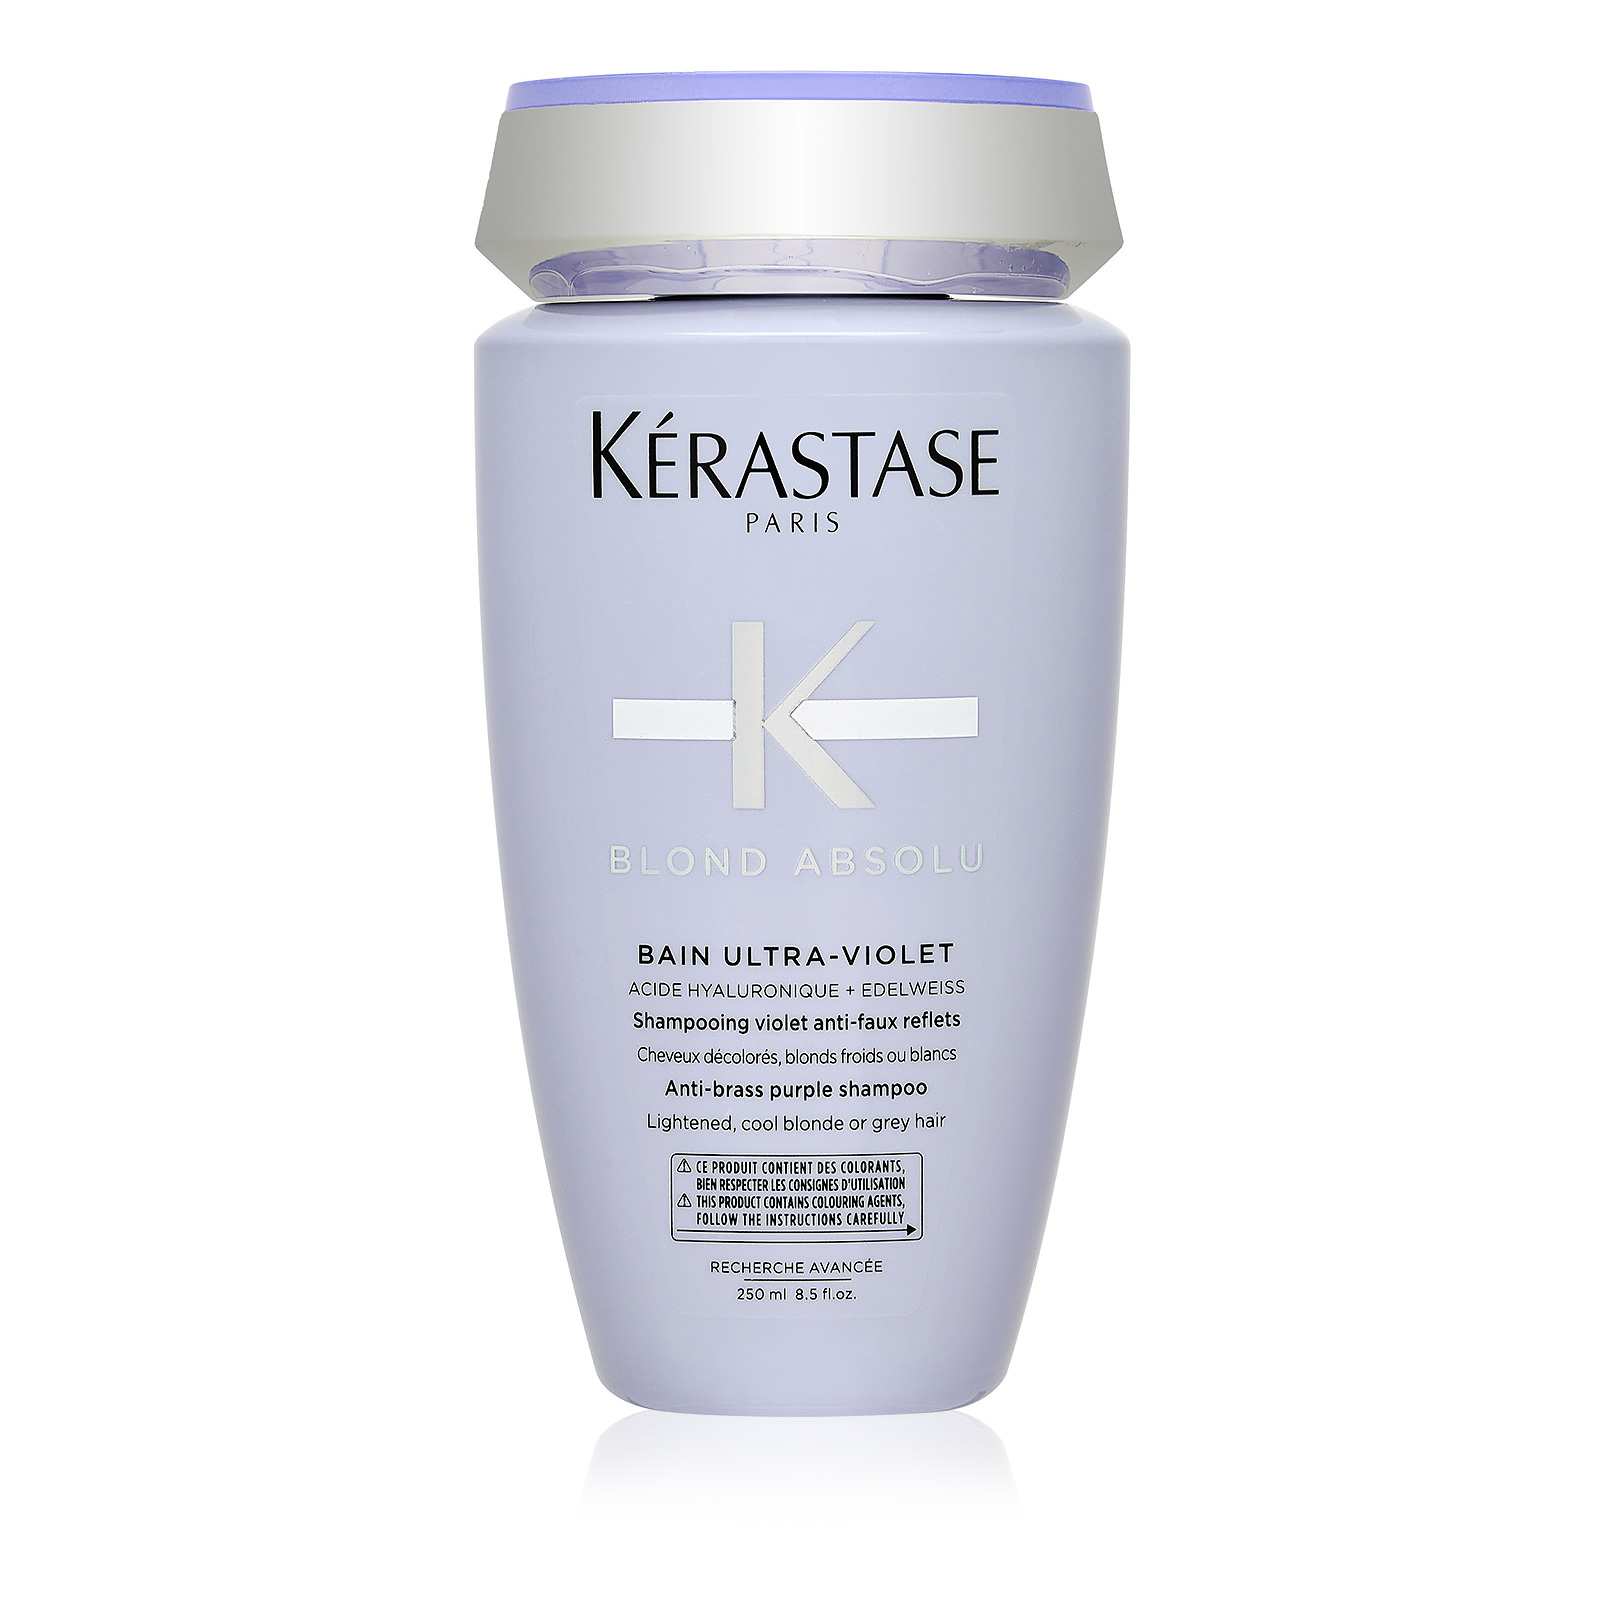 Kérastase Paris Absolu Ultra-Violet Anti-Brass Shampoo (Lightened, Cool Blonde Or Hair)250 ml 8.5 oz AKB Beauty